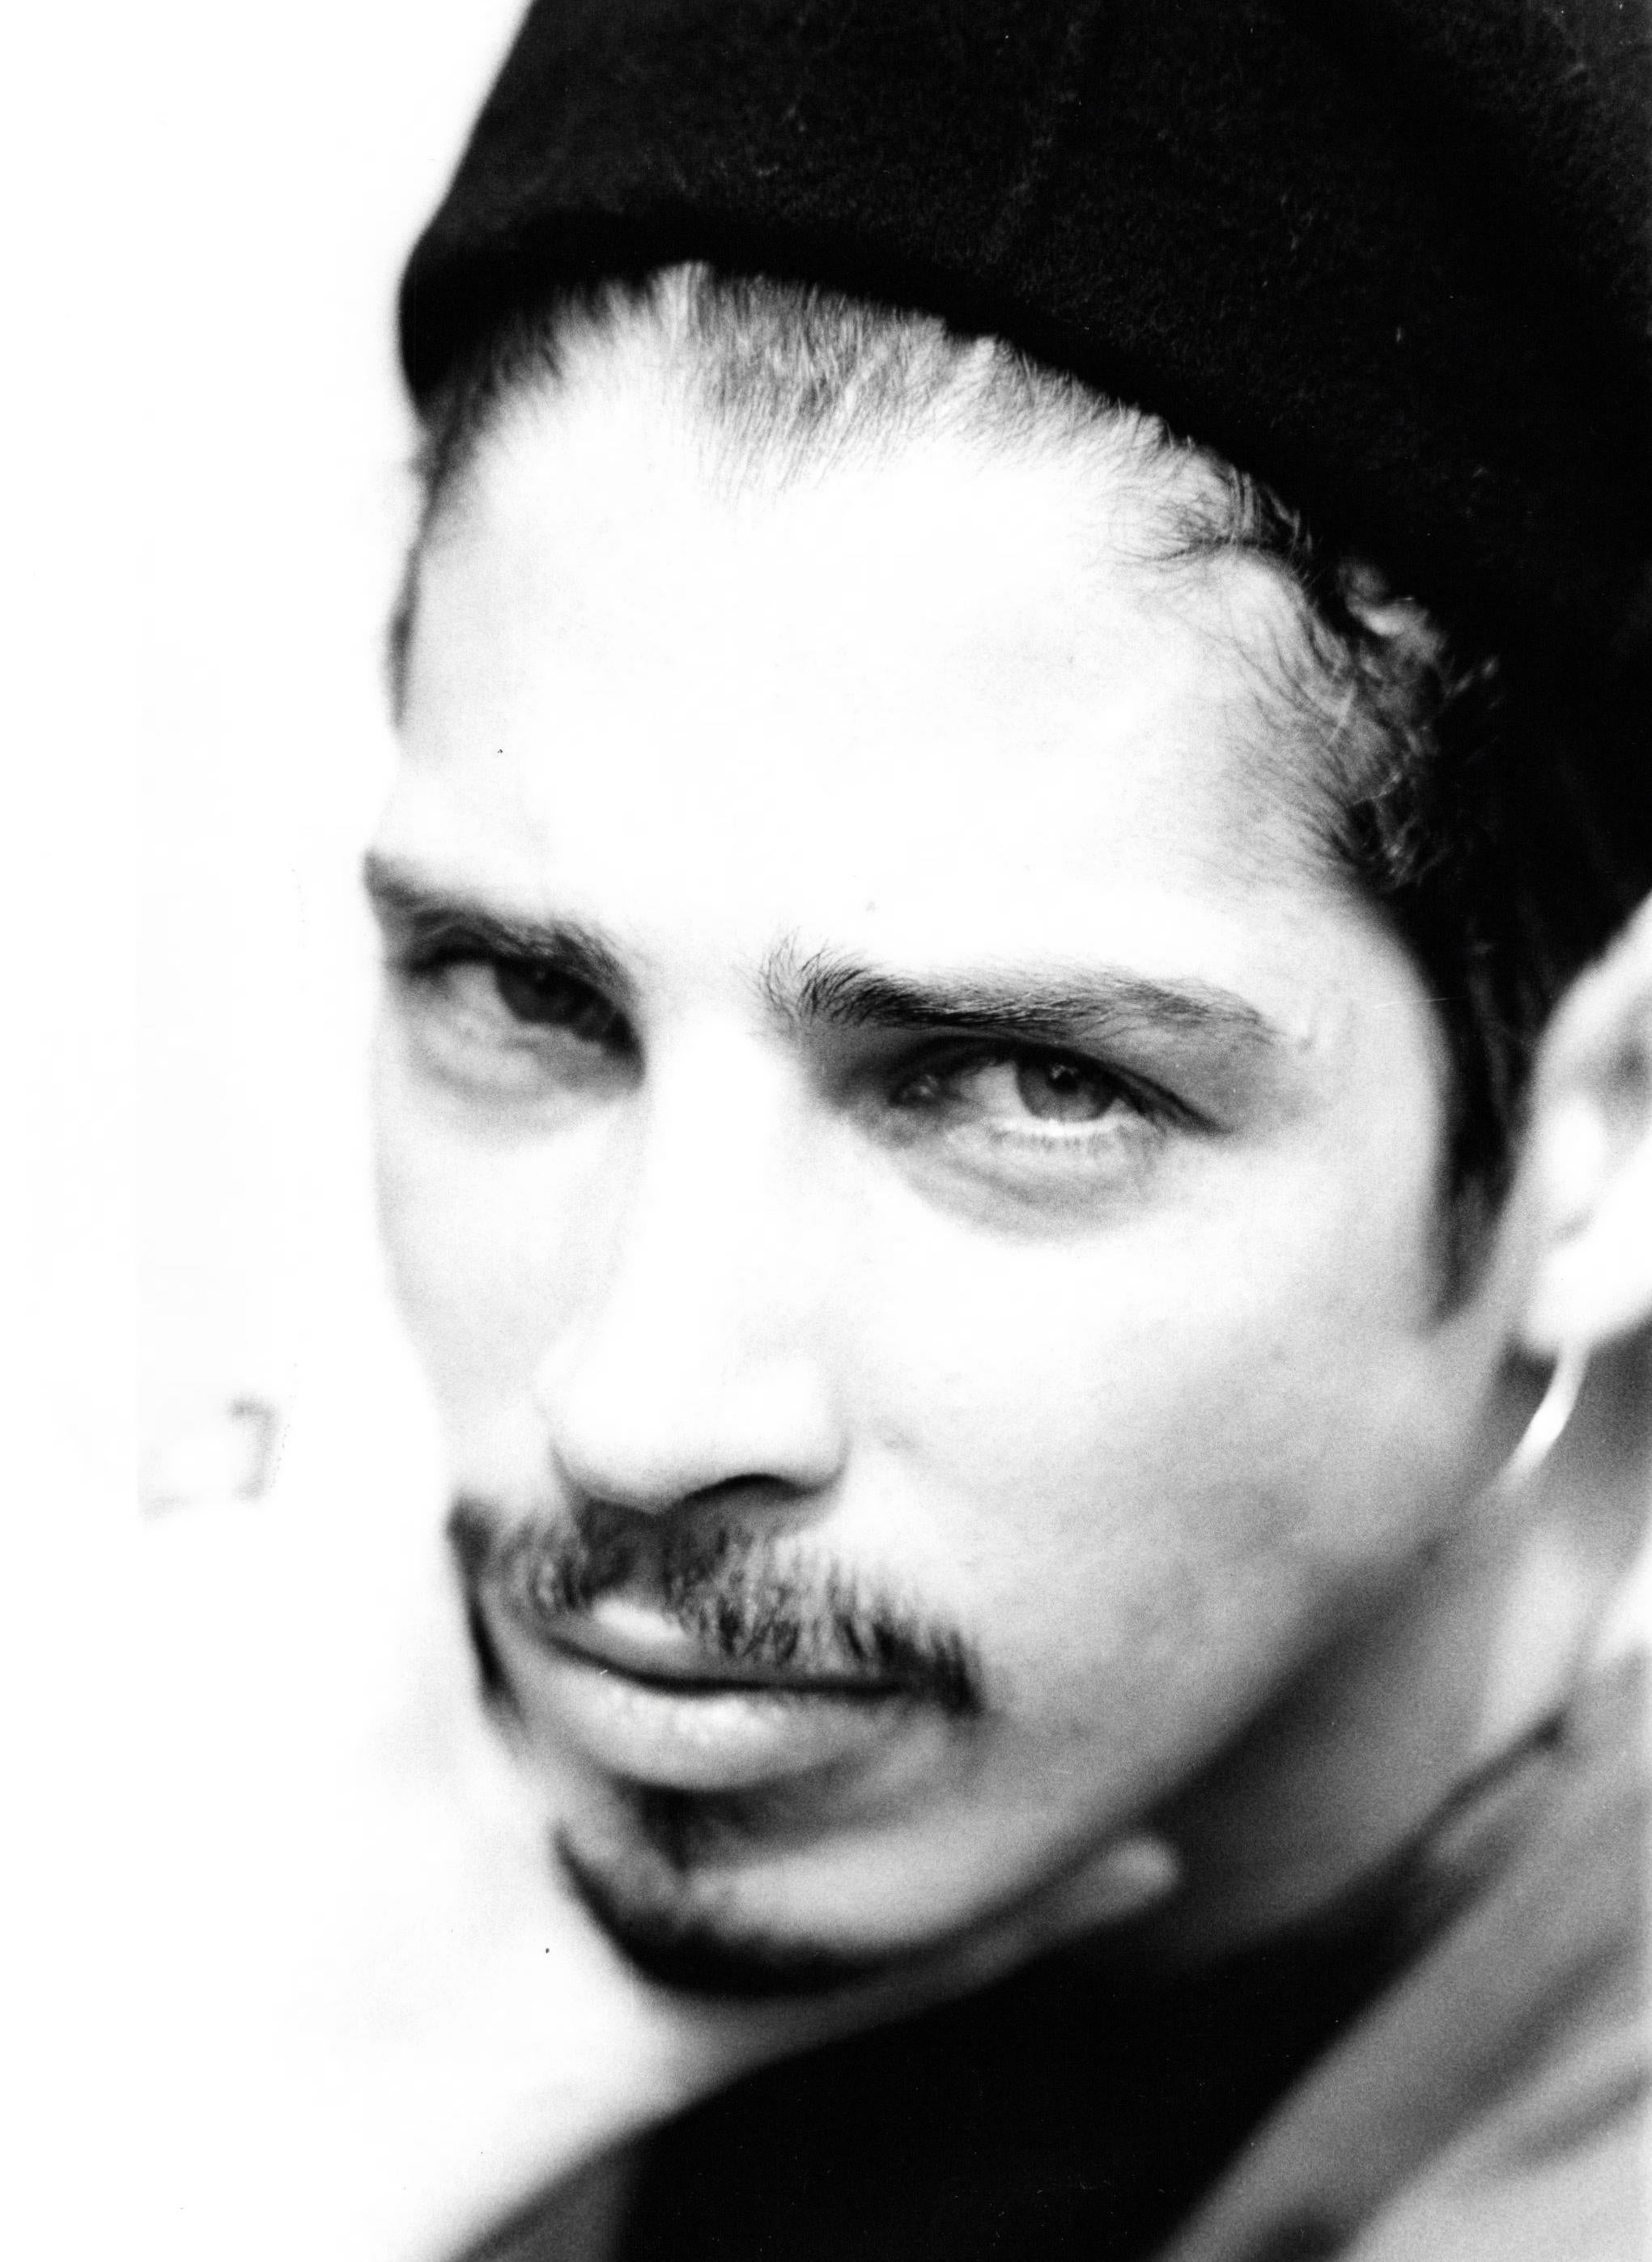 Robert Matheu Portrait Photograph - Chris Cornell of Soundgarden Closeup Vintage Original Photograph